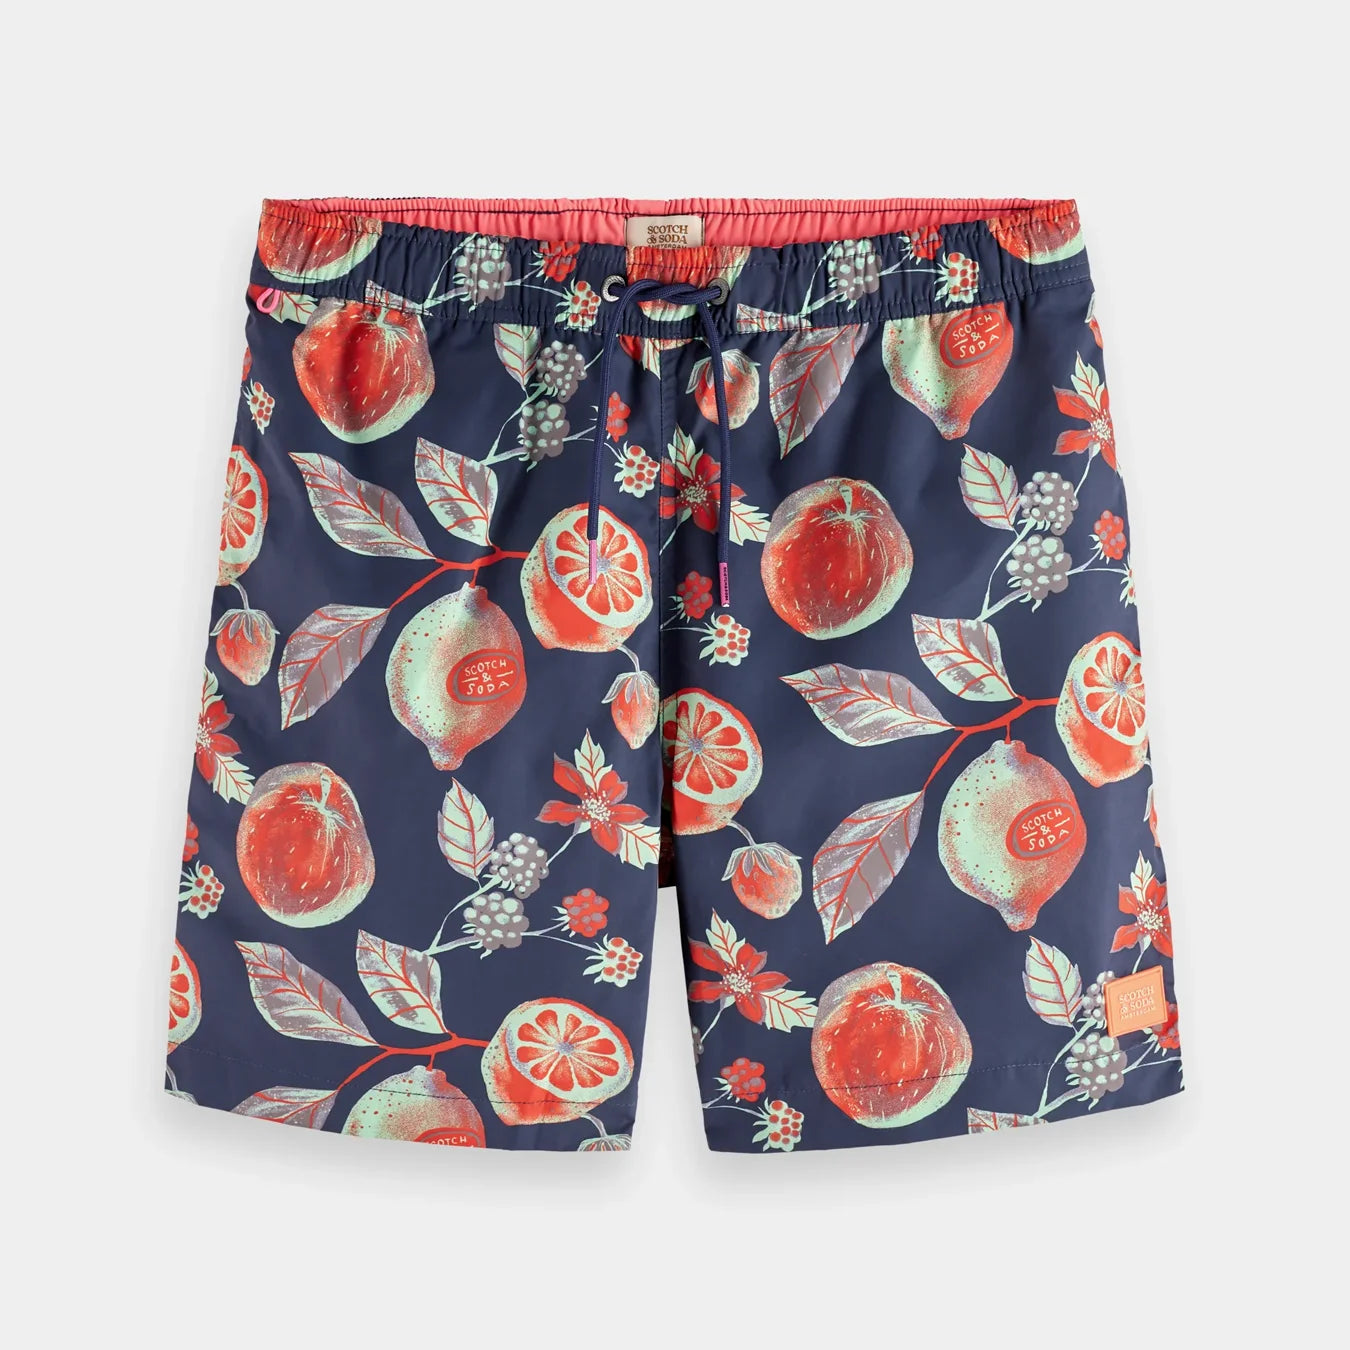 'Scotch & Soda Mid-Length Printed Swim Shorts' in 'Multi Fruits' colour